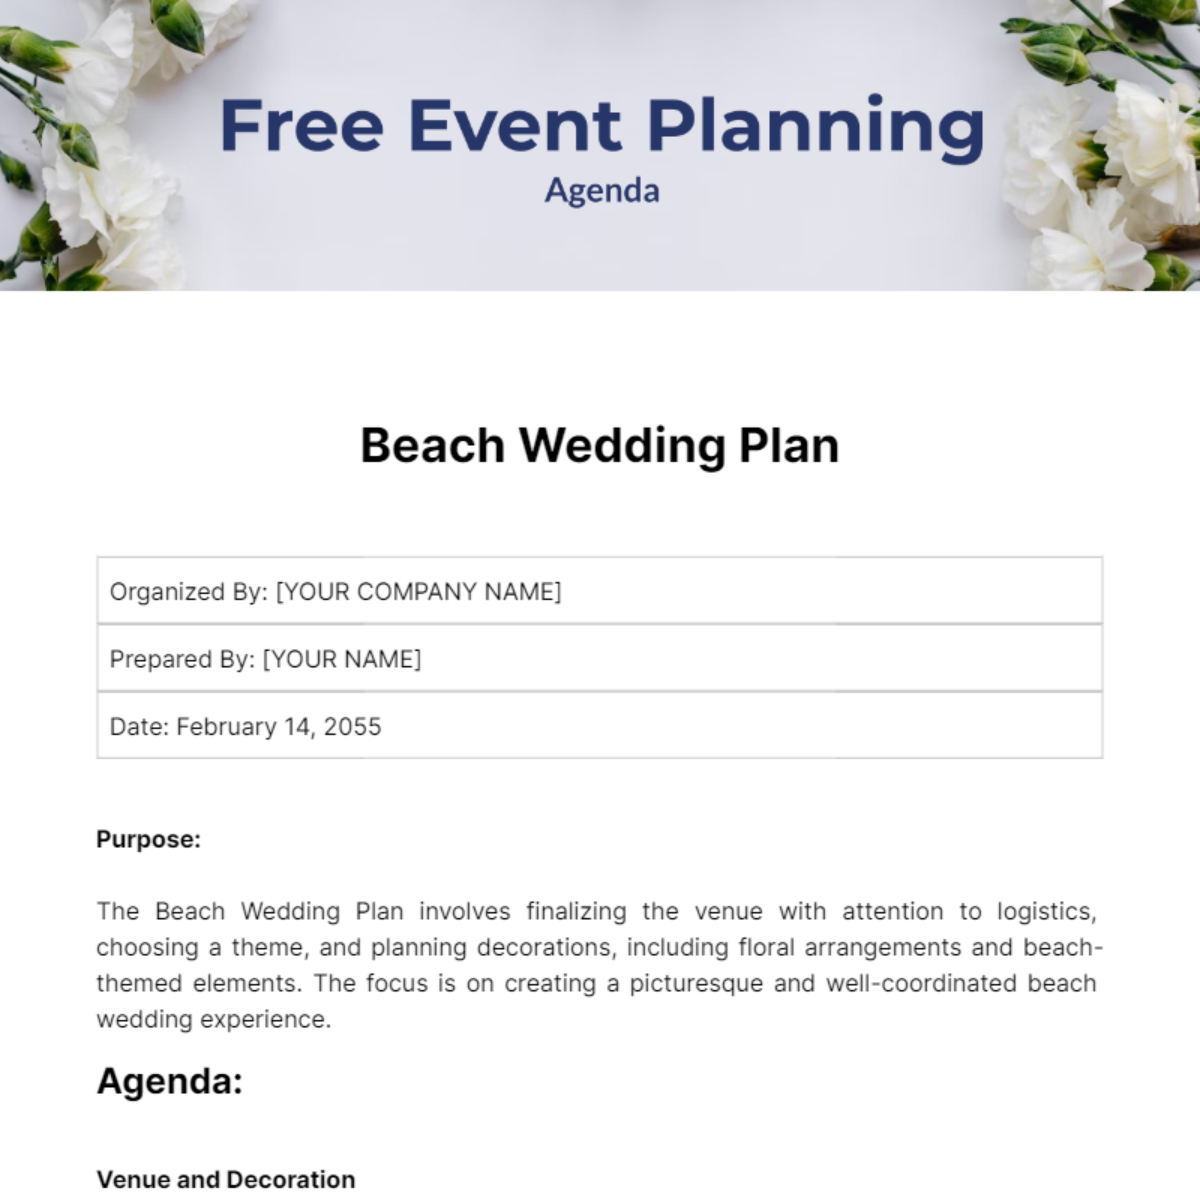 Event Planning Agenda Template